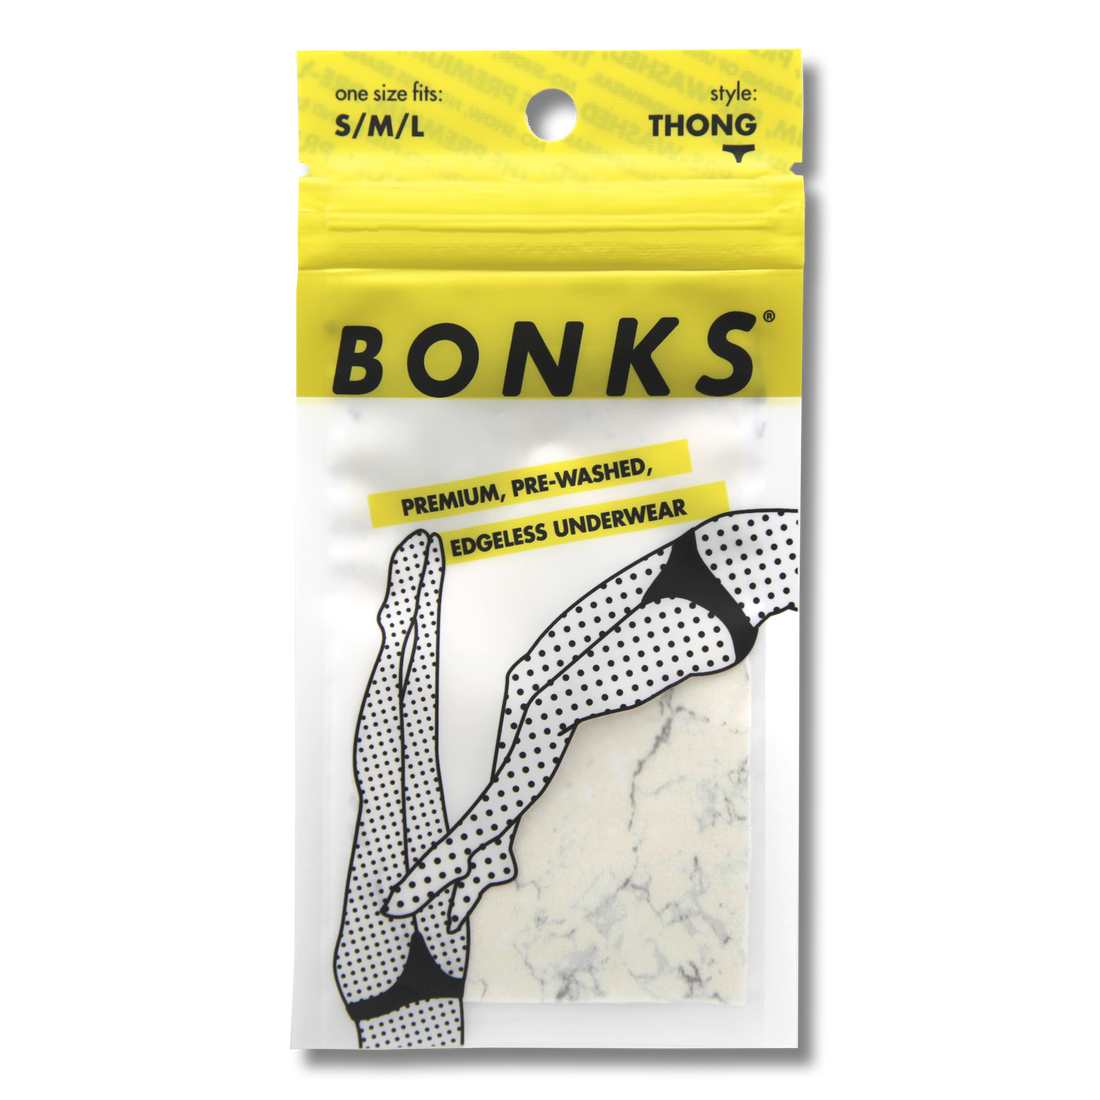 Classic Thong (Rock Bottom) by BONKS